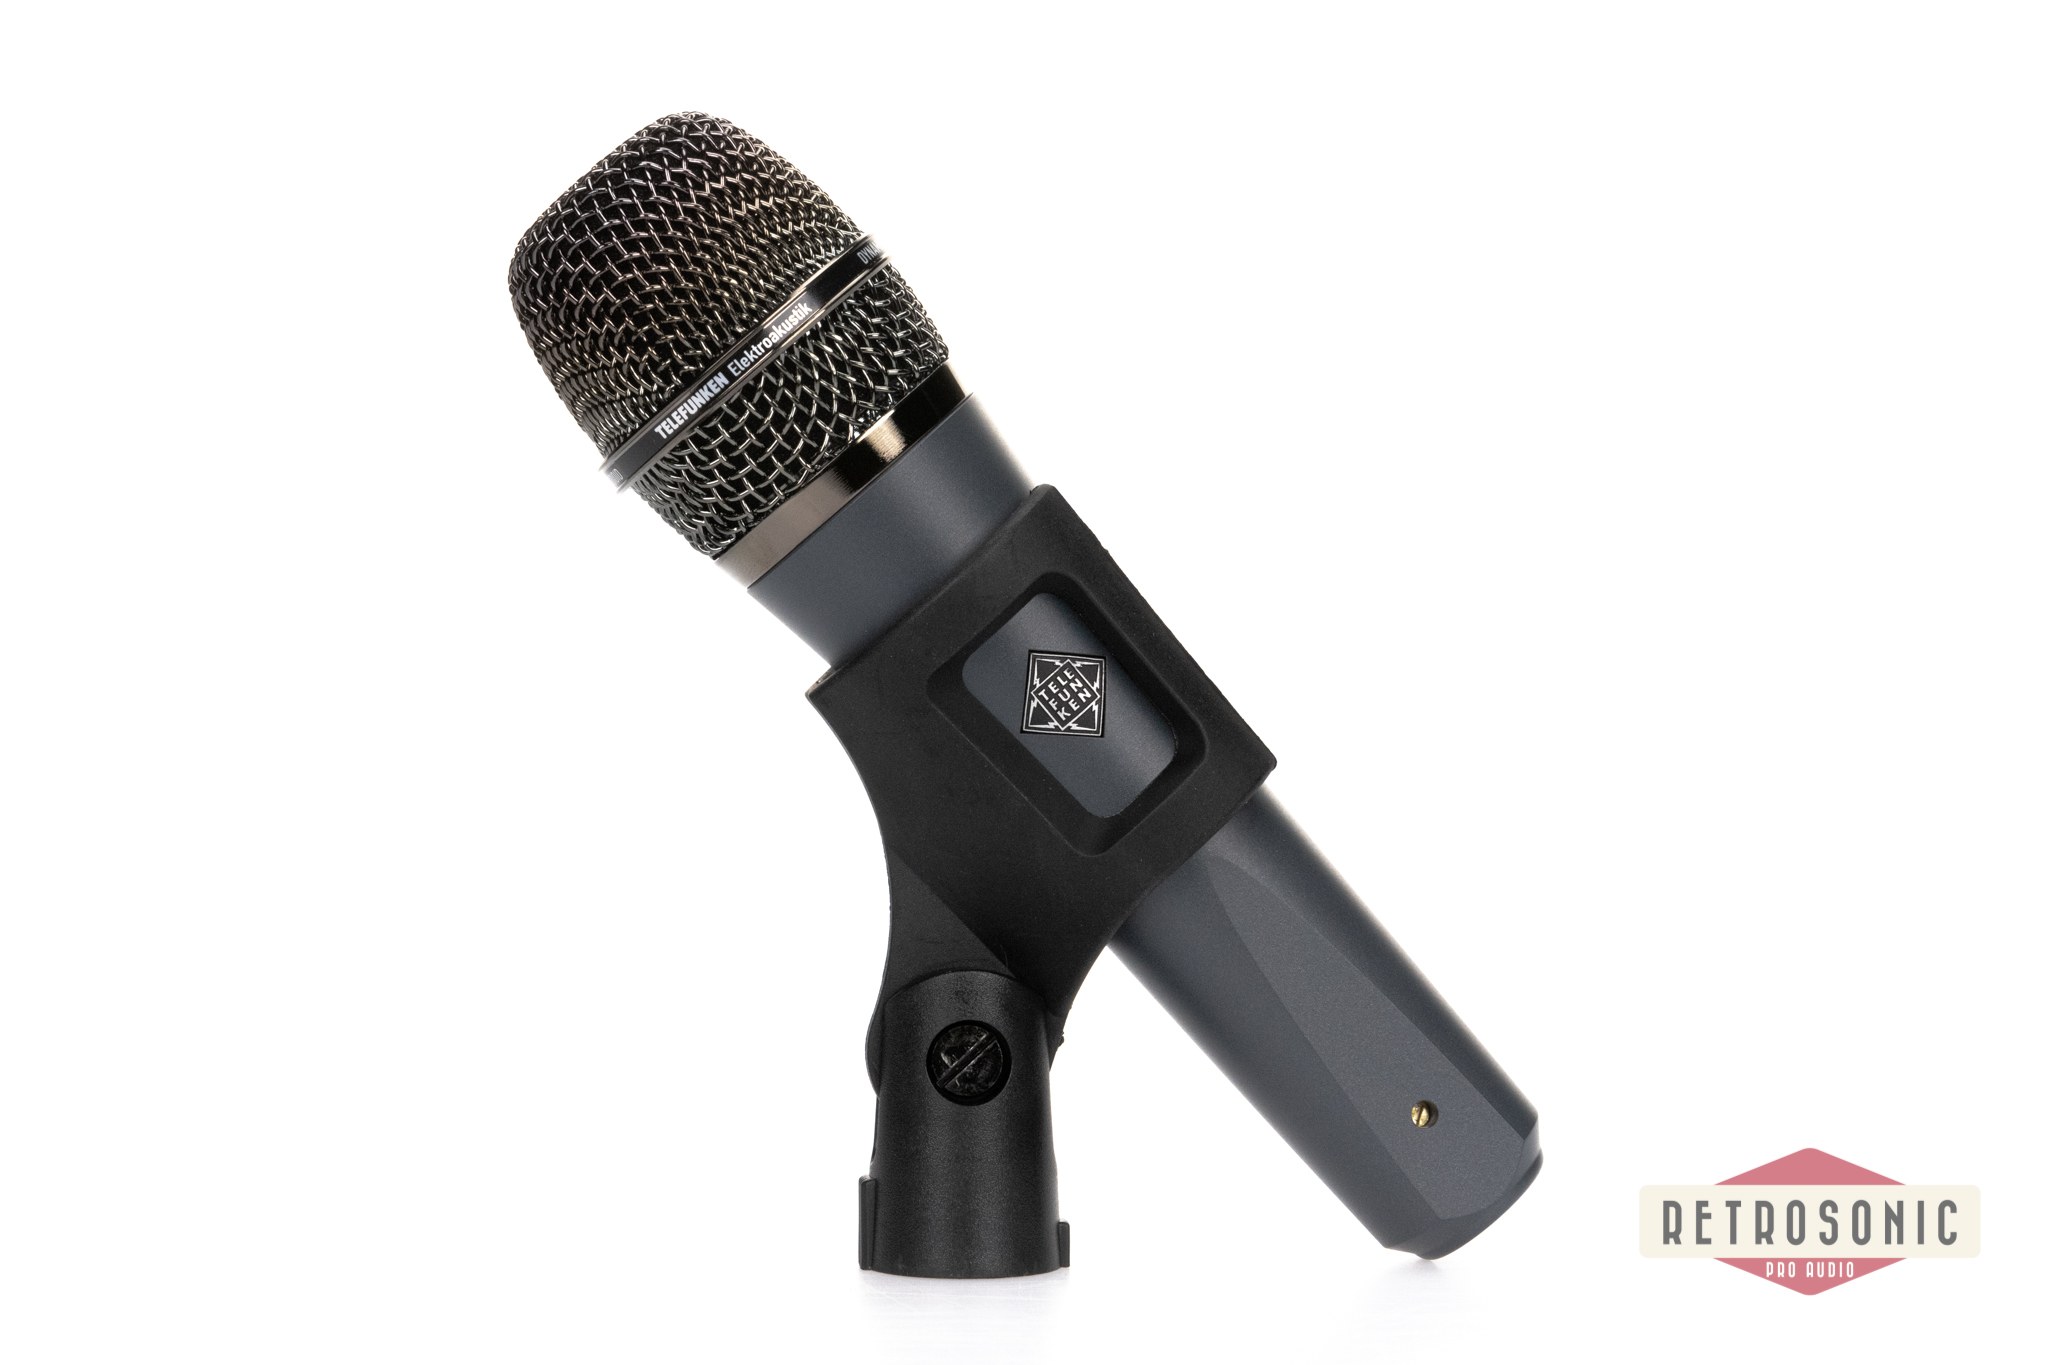 Telefunken M81 Dynamic Microphone Grey/Black grille